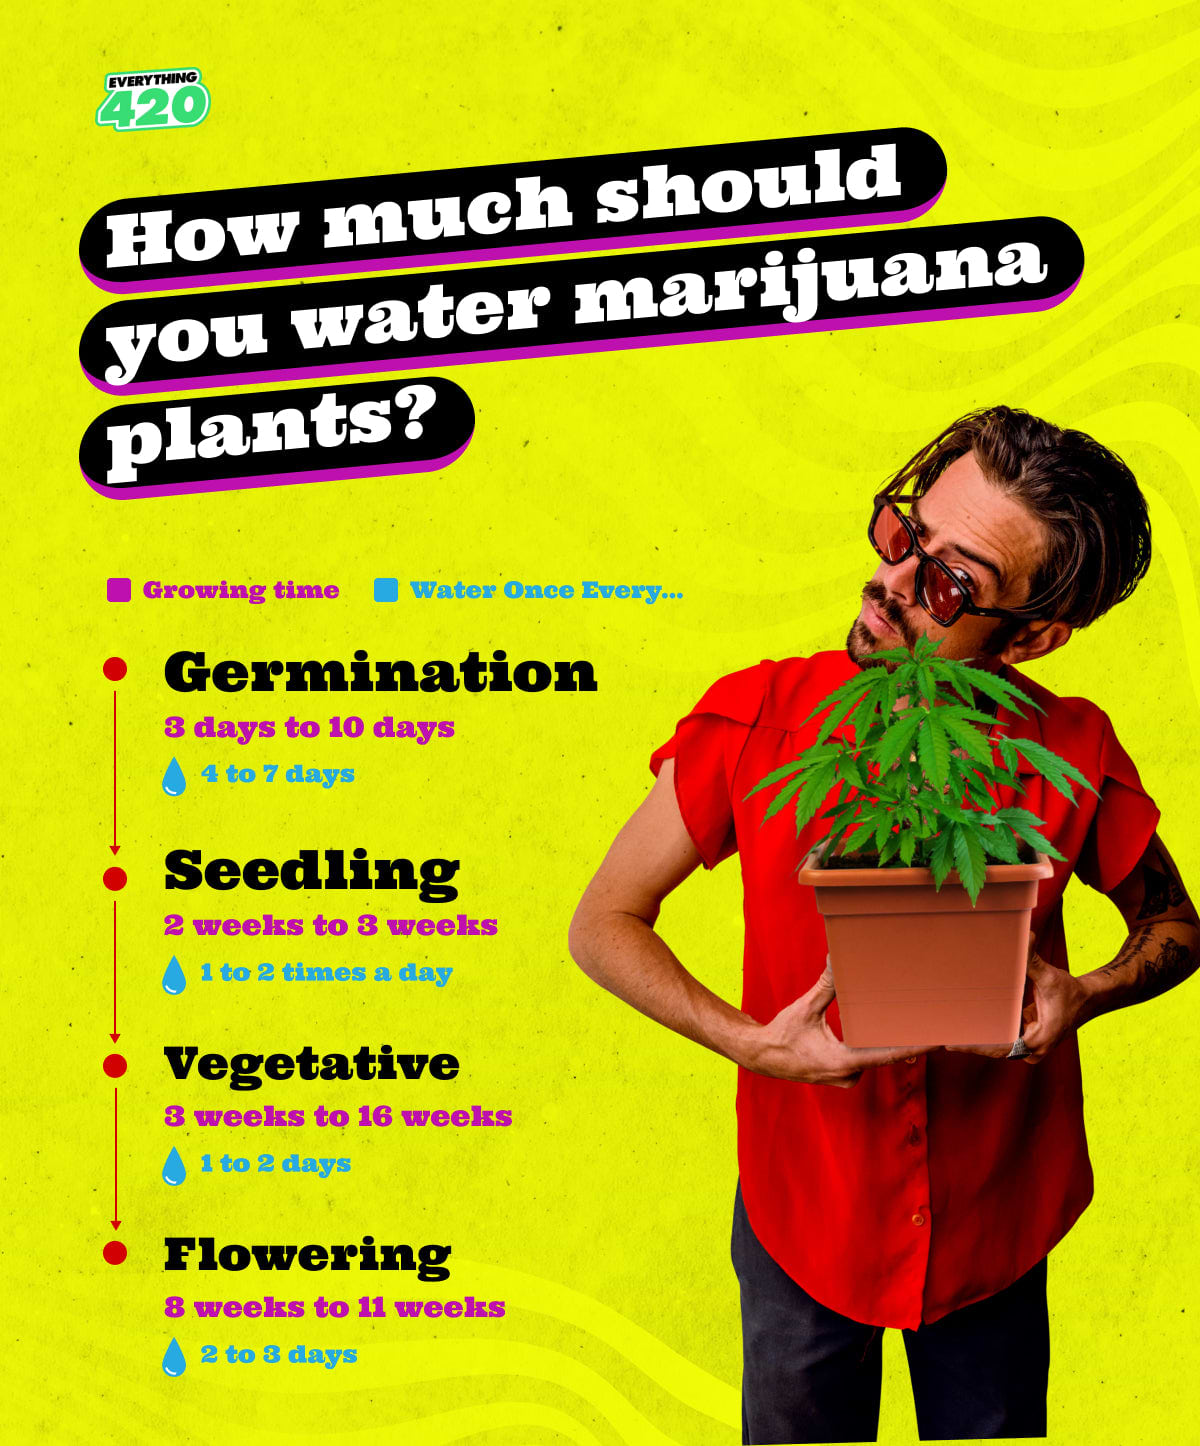 How much should you water marijuana plants?